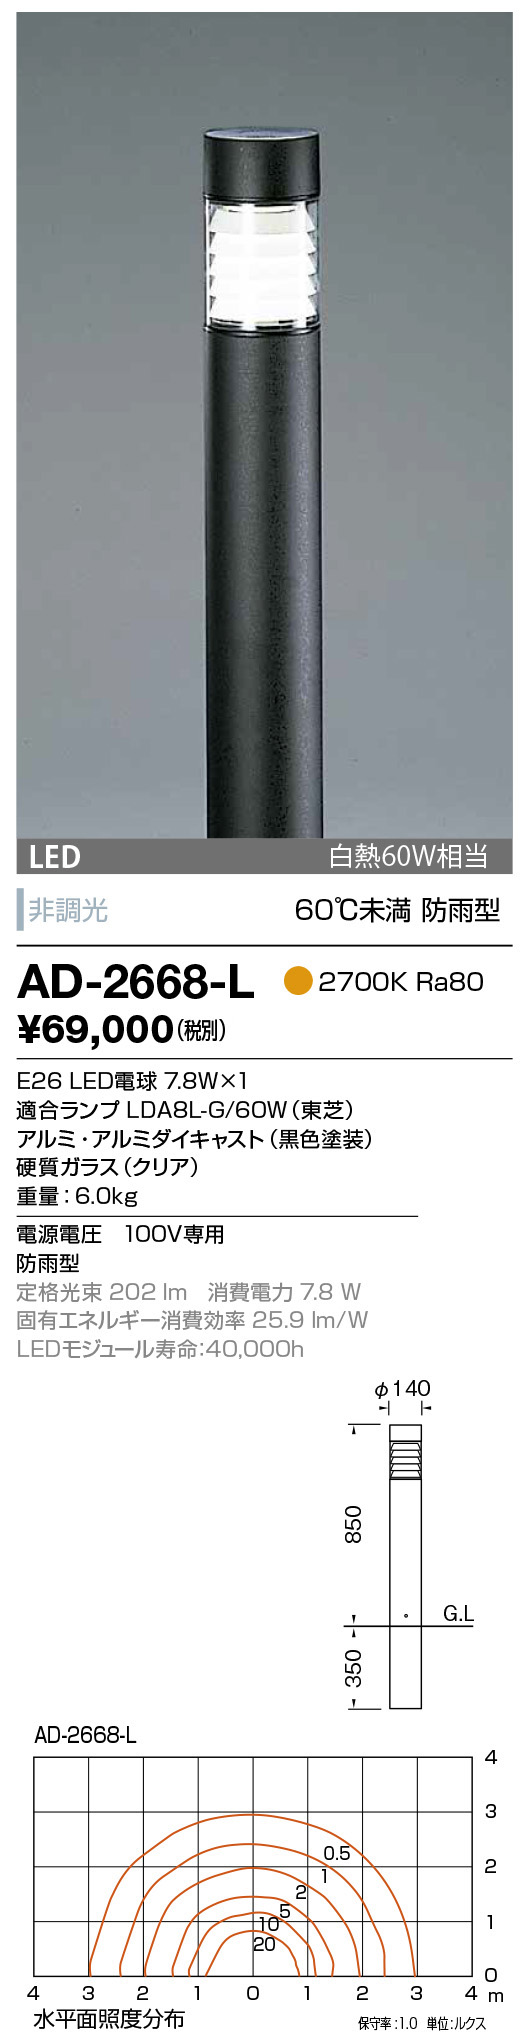 AD-2668-L(山田照明) 商品詳細 ～ 照明器具・換気扇他、電設資材販売のブライト